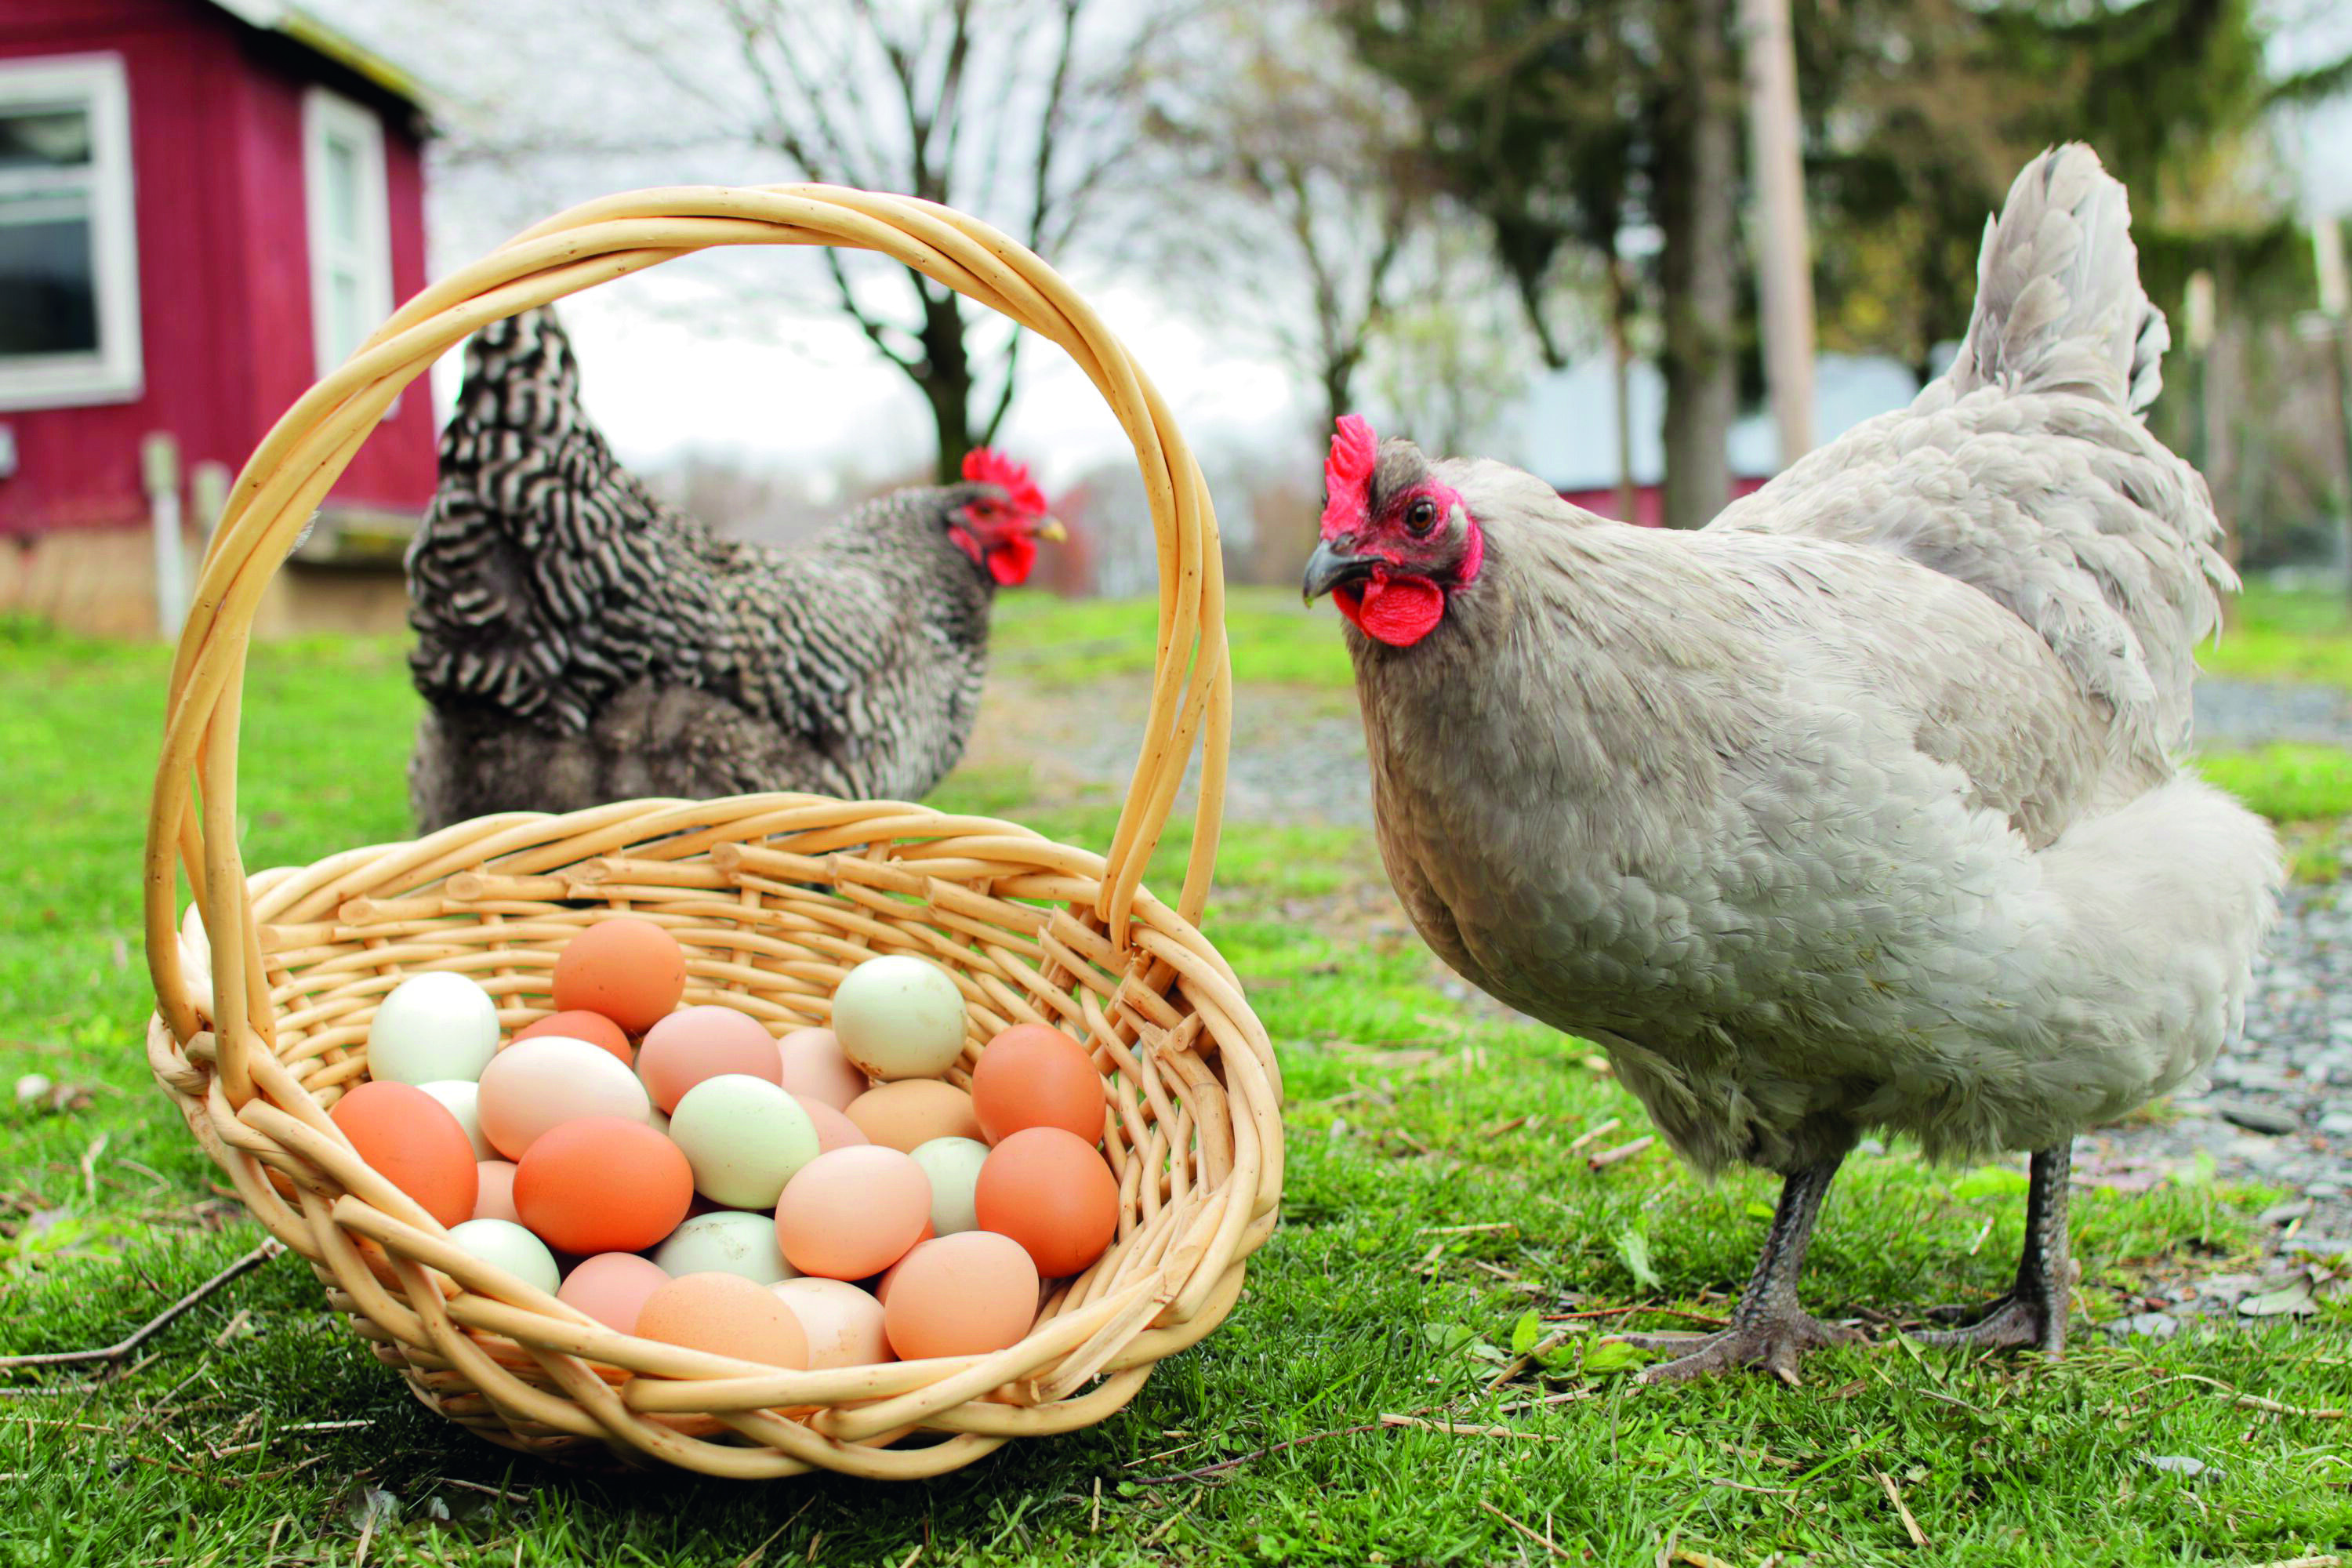 3 tavuk 3 günde 3 yumurta yumurtlar. 12 tavuk 12 günde kaç yumurta yumurtlar?